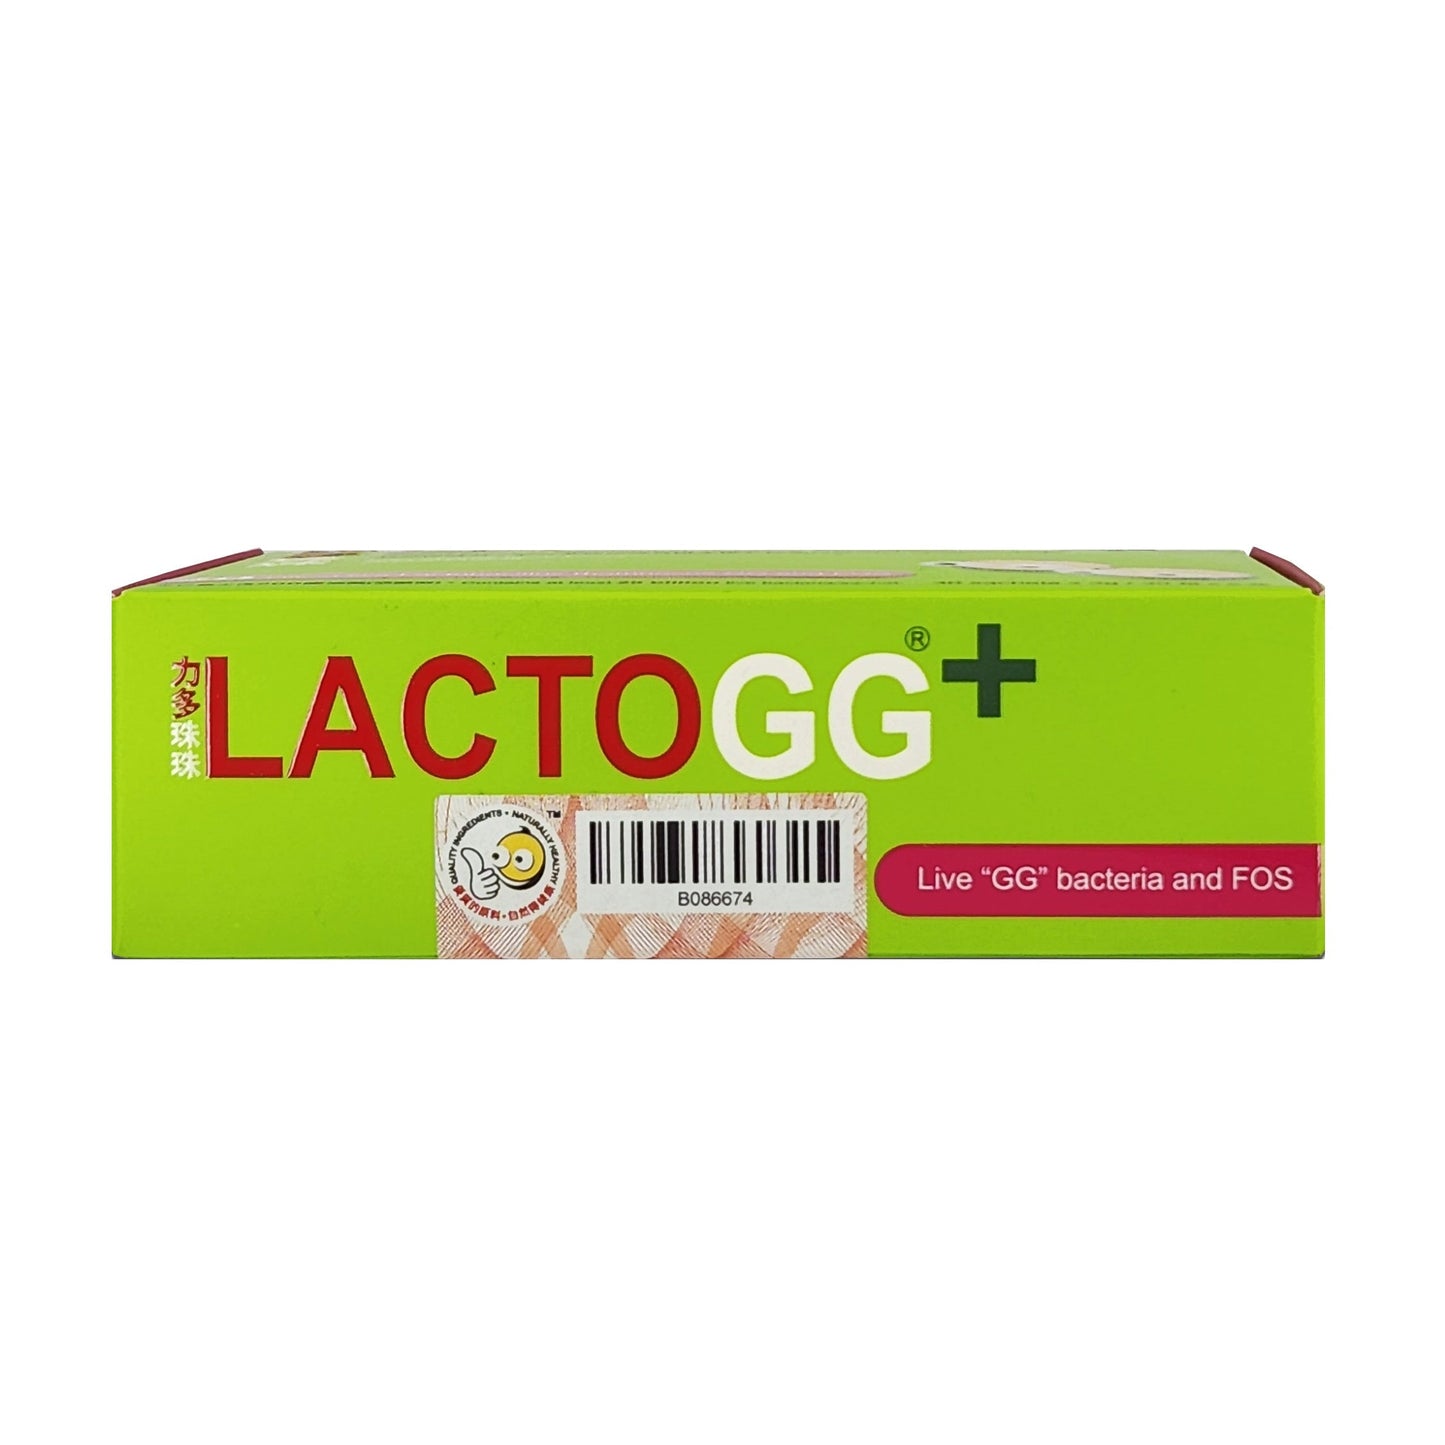 LactoGG+ 益生菌袋装 30 粒 -Lactobacillus GG